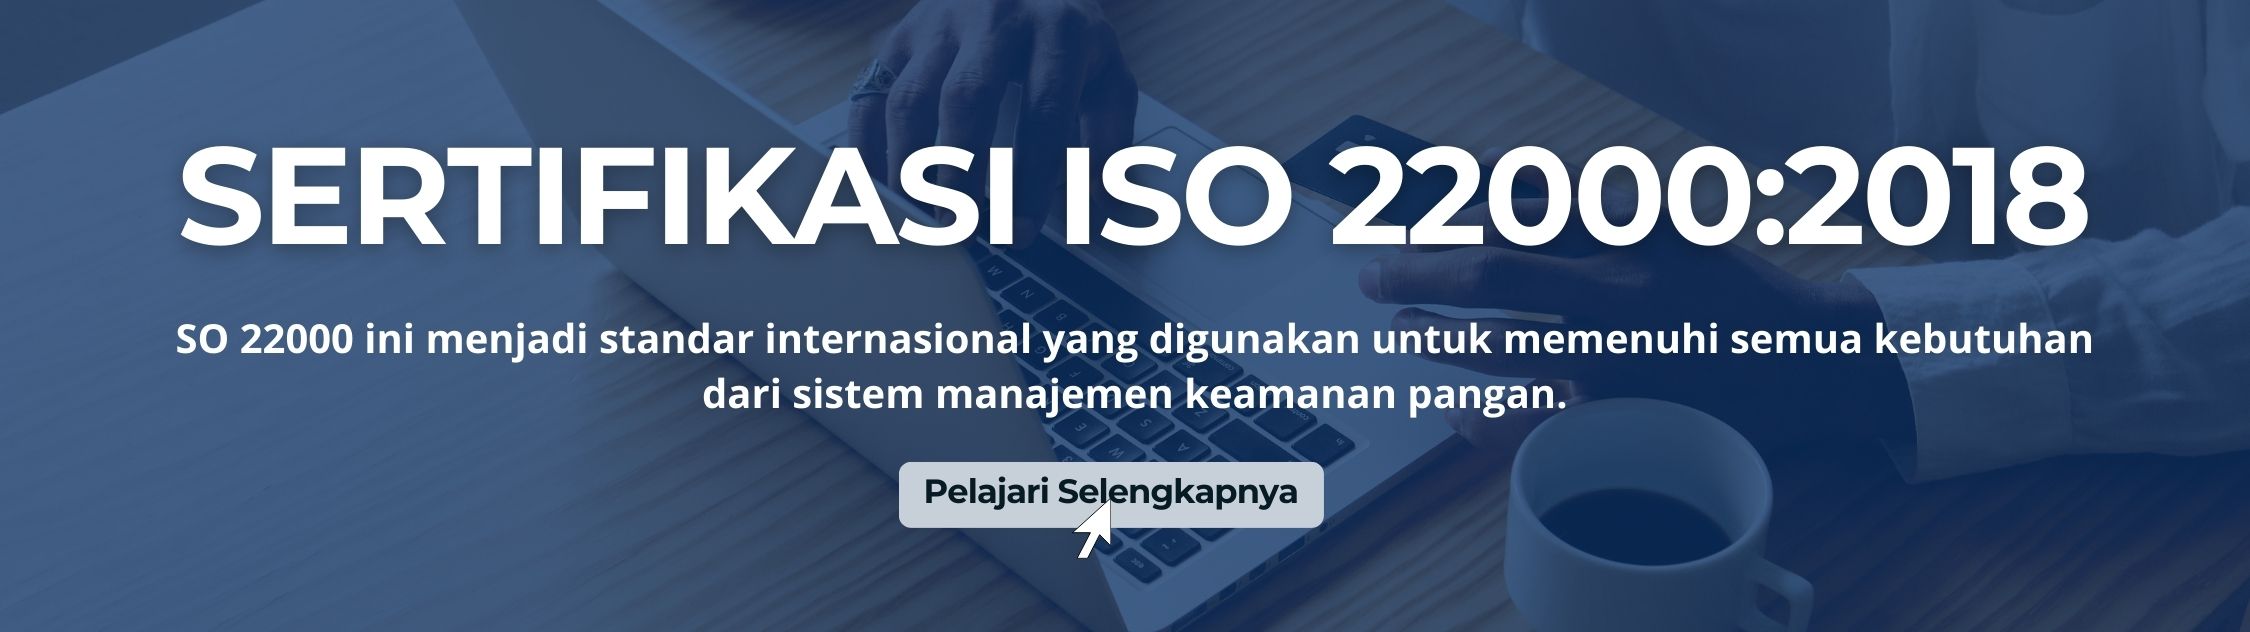 SERTIFIKASI ISO 22000